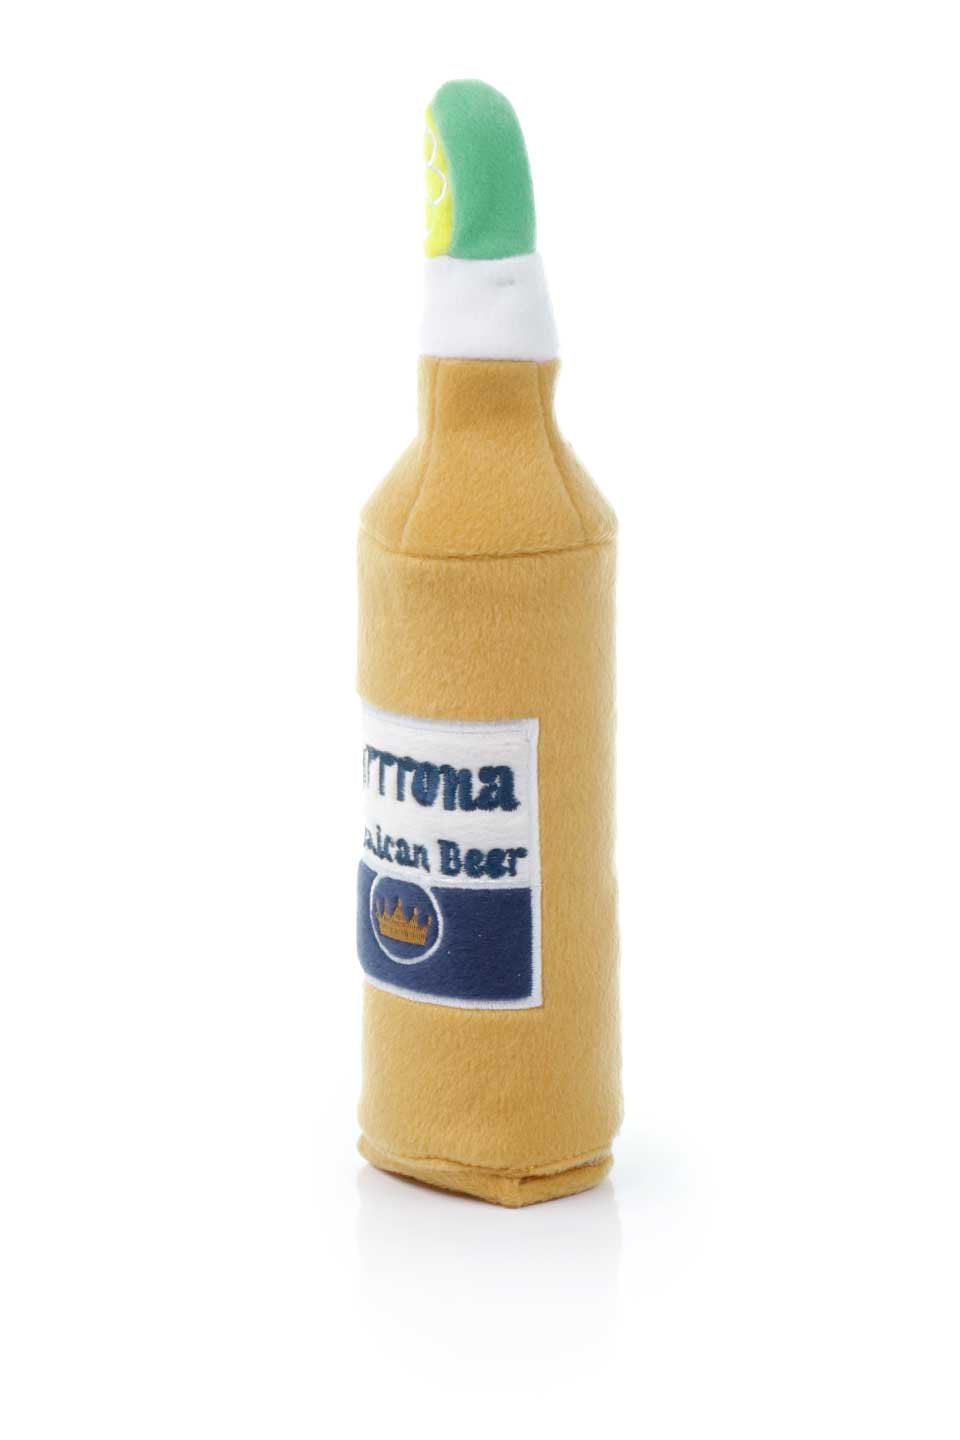 Grrrona Beer Water Bottle Crackler Toy コロナ瓶ペットボトル入り・パロディーぬいぐるみ